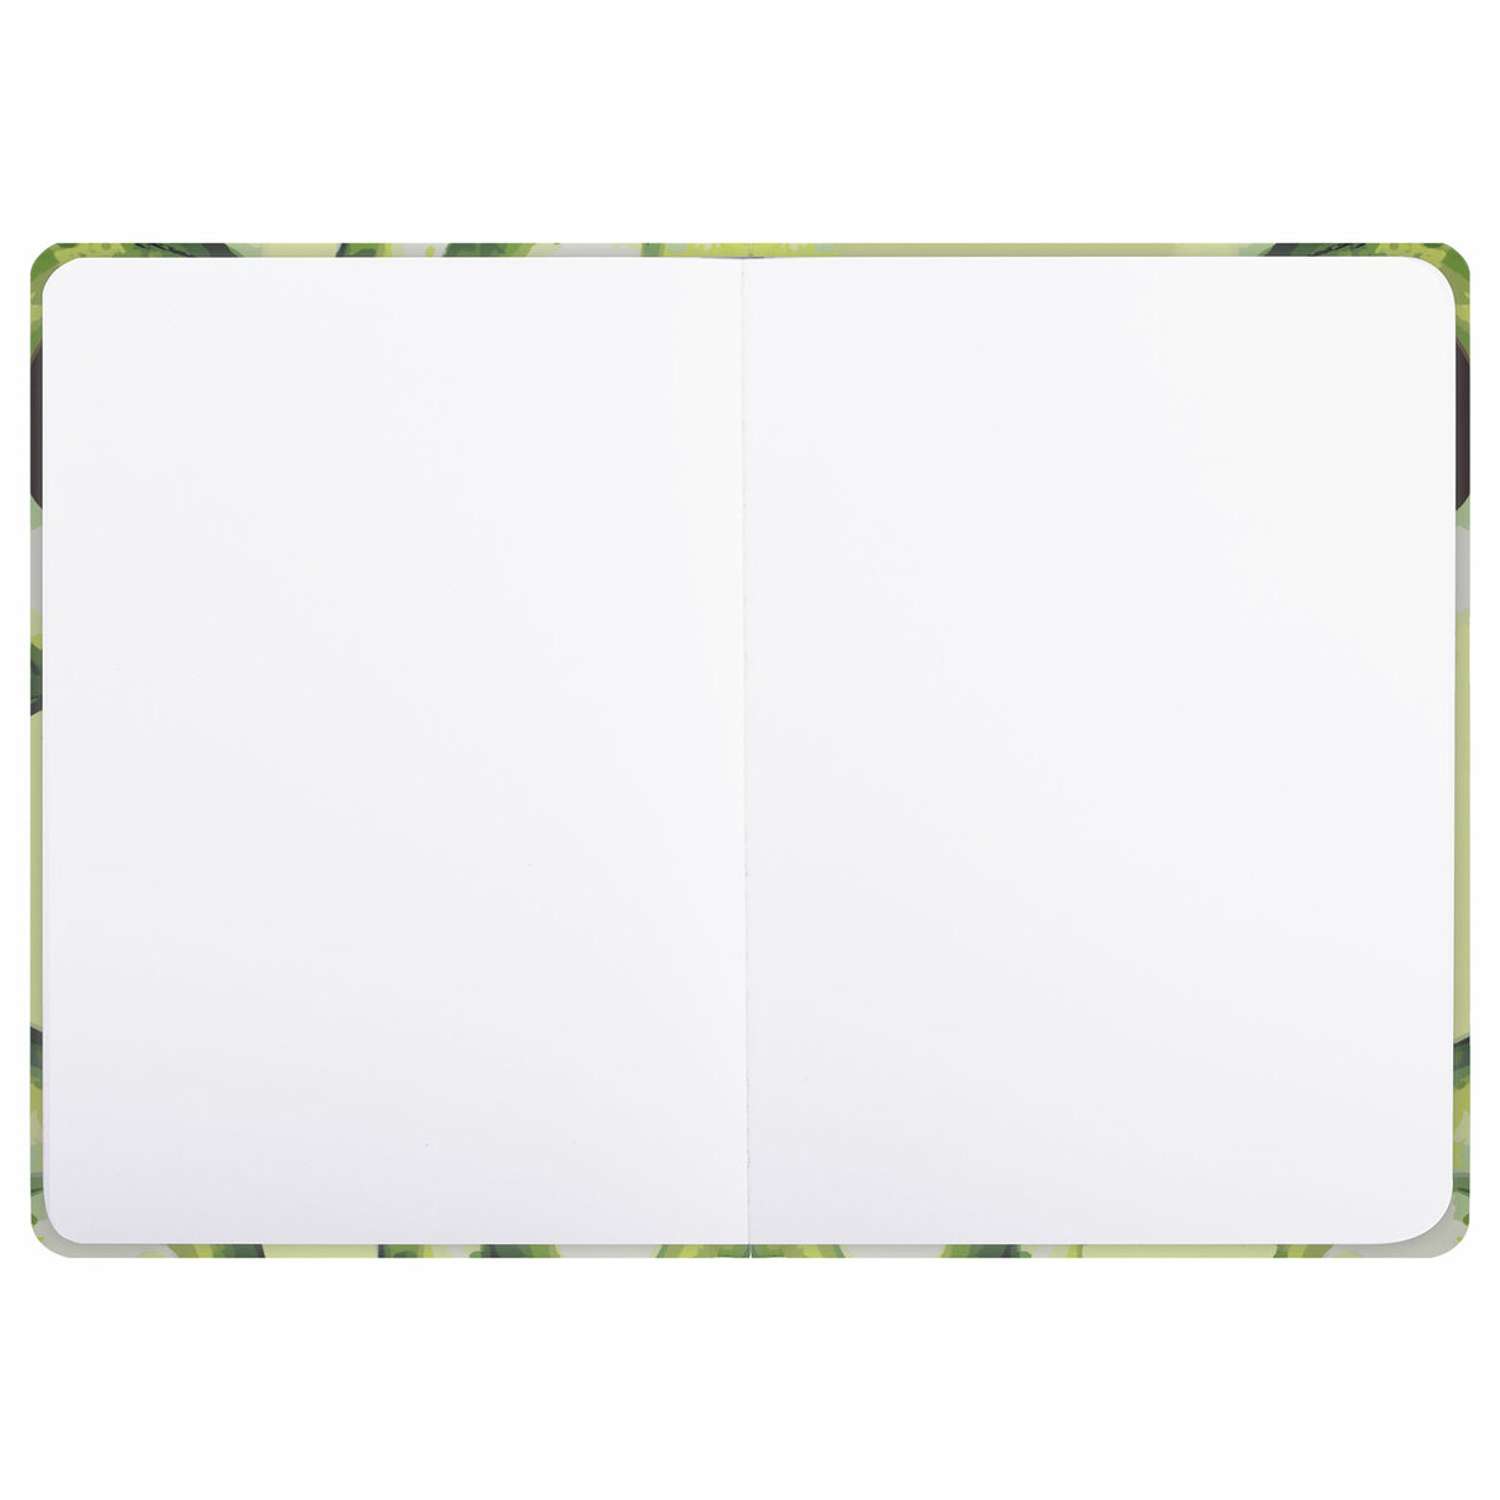 Блокнот-скетчбук Brauberg с белыми страницами для рисования эскизов 64 листа - фото 10